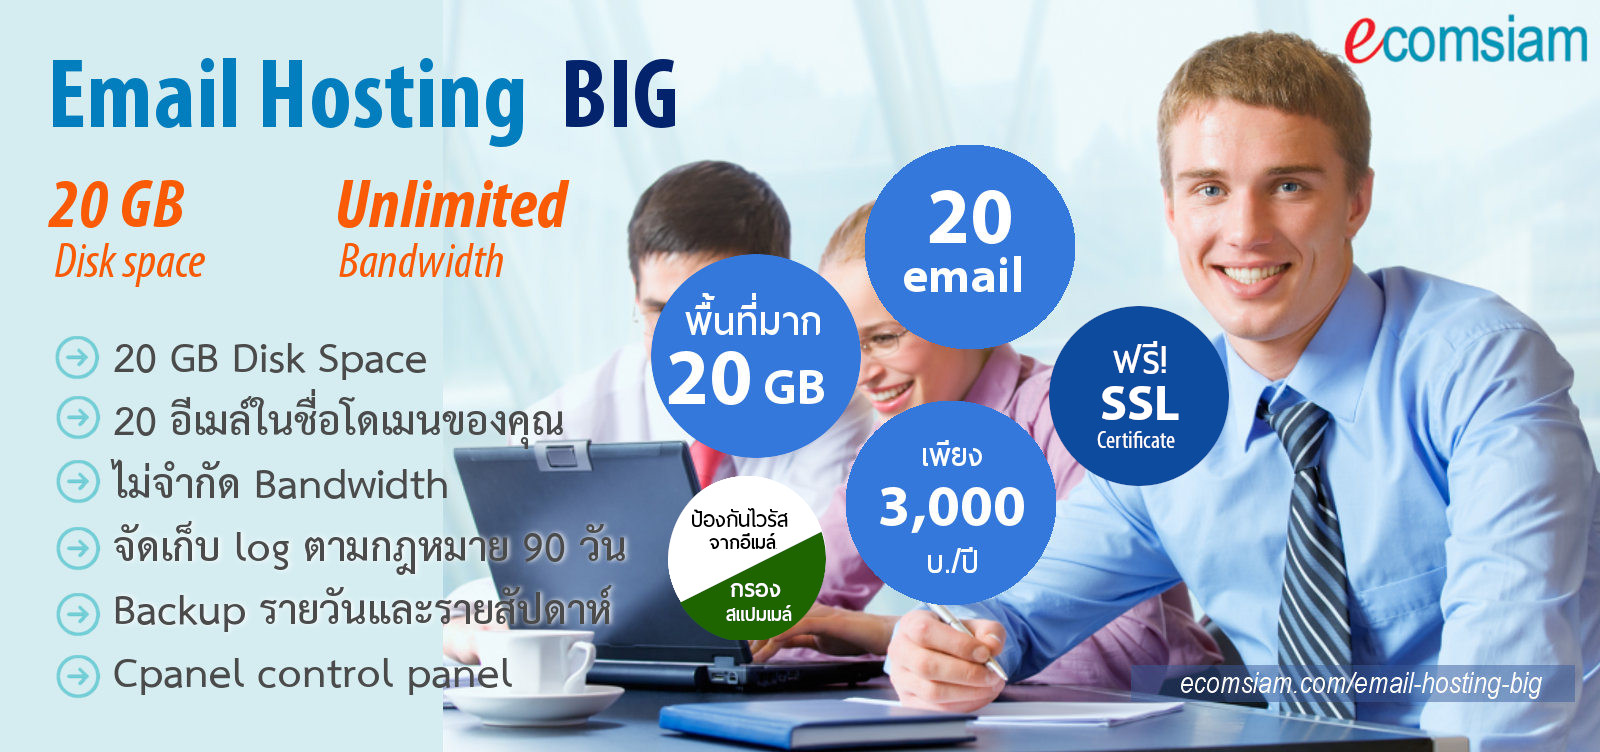 email hosting thailand คุณภาพสูง สำหรับองค์กร พื้นที่ขนาดใหญ่ ราคาไม่แพง เว็บโฮสติ้งไทย free SSL